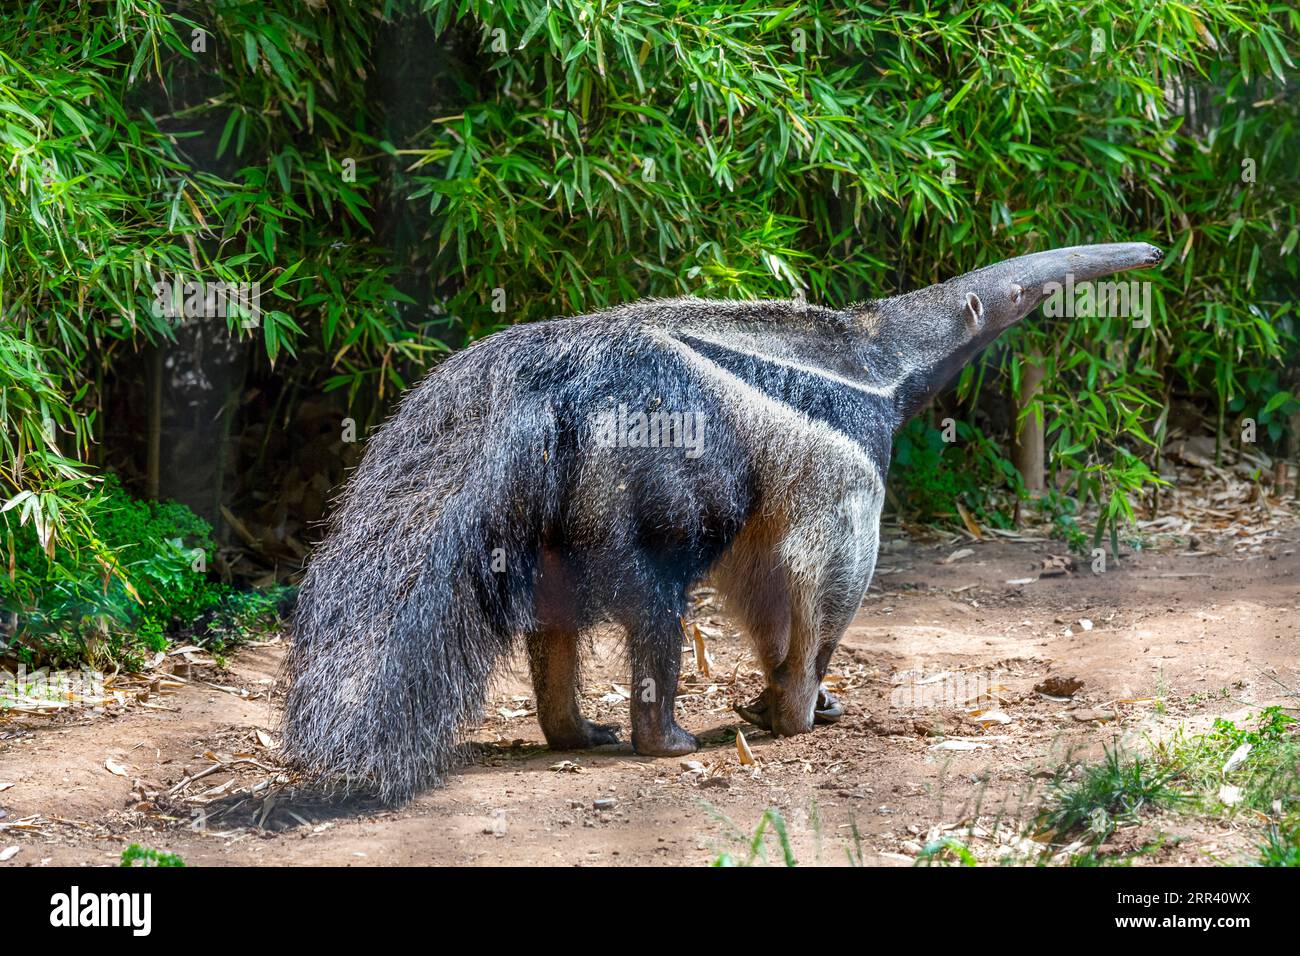 Giant Anteater, Myrmecophaga tridactyla, animal with long tail and log muzzle nose Stock Photo